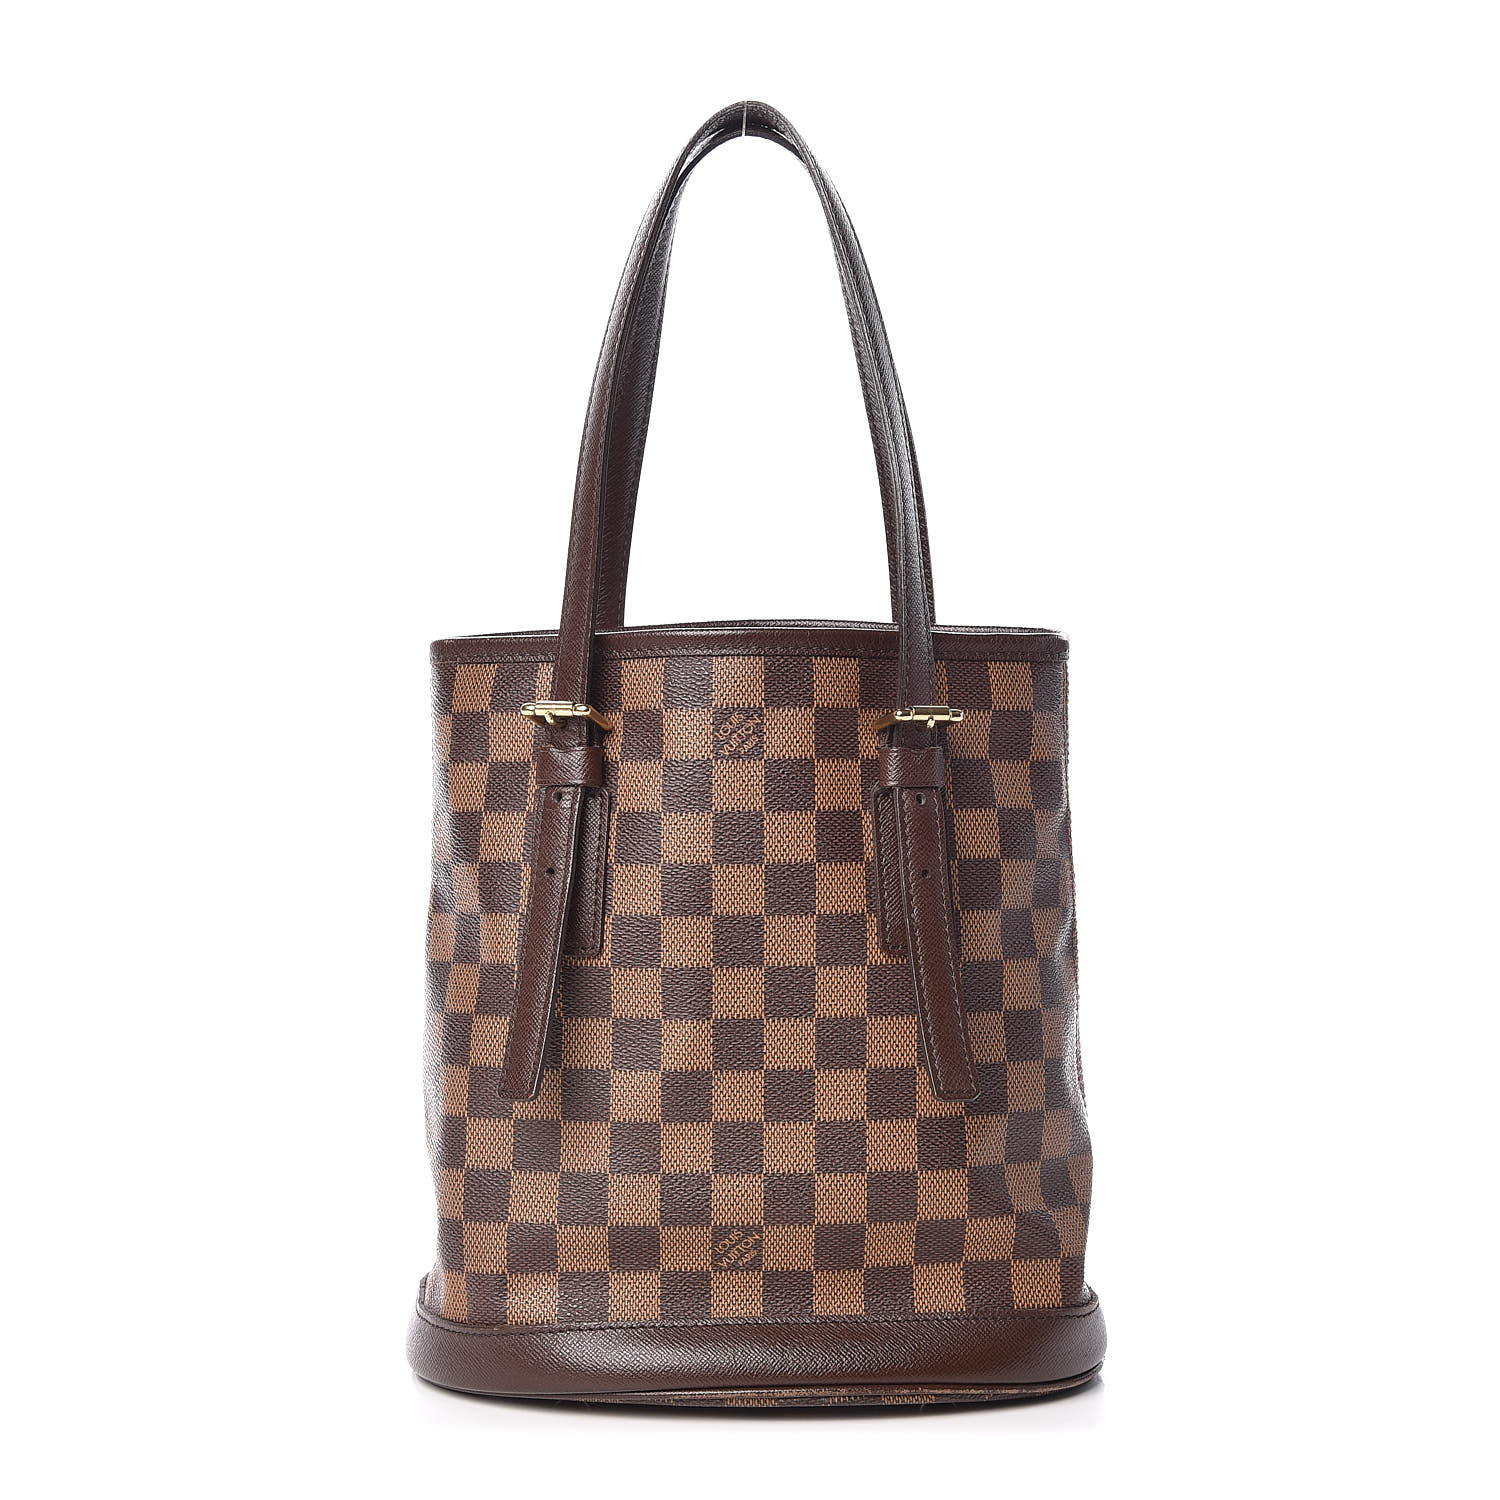 Louis Vuitton, Bags, Discontinued Louis Vuitton Damier Ebene Berkeley Bag  Rare Find